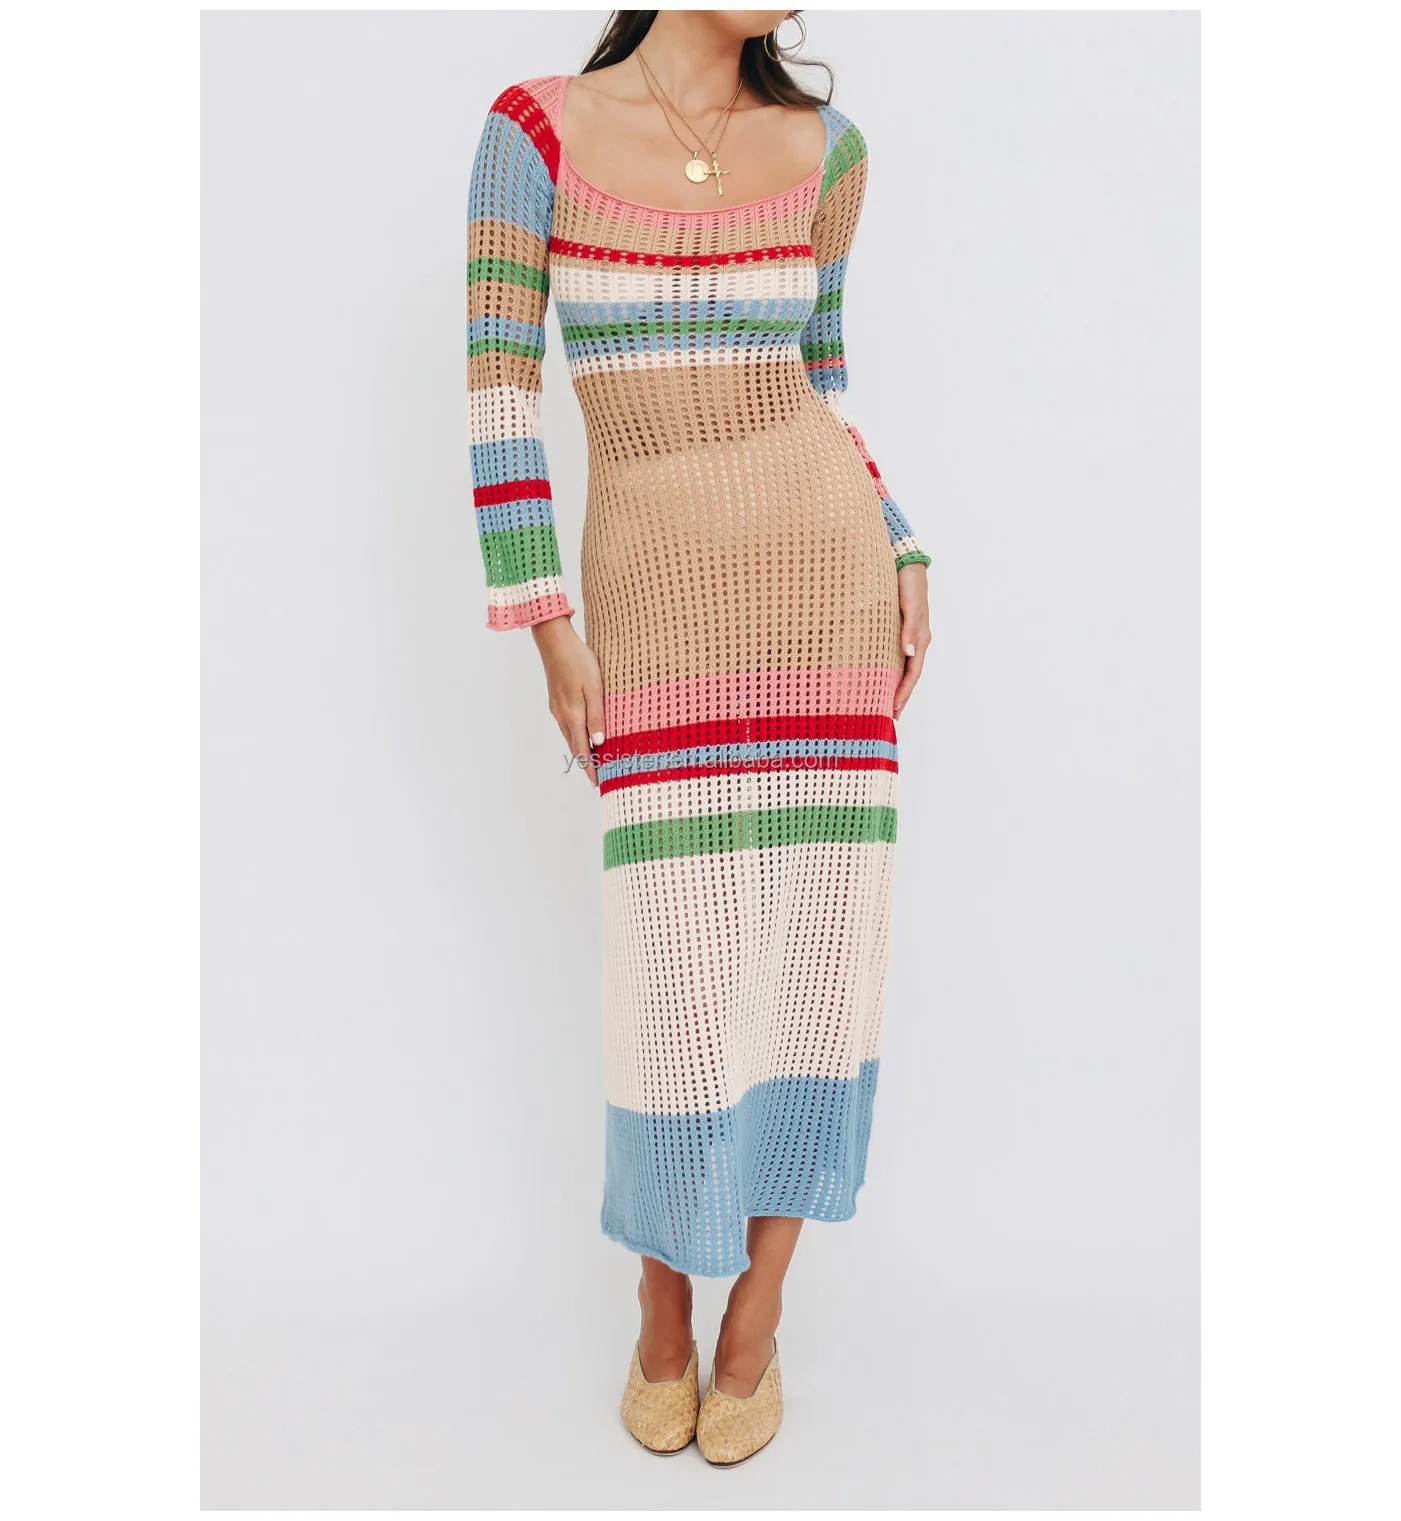 Women Knitted colorful striped handmade crochet dress with long sleeves maxi women summer beach dresses